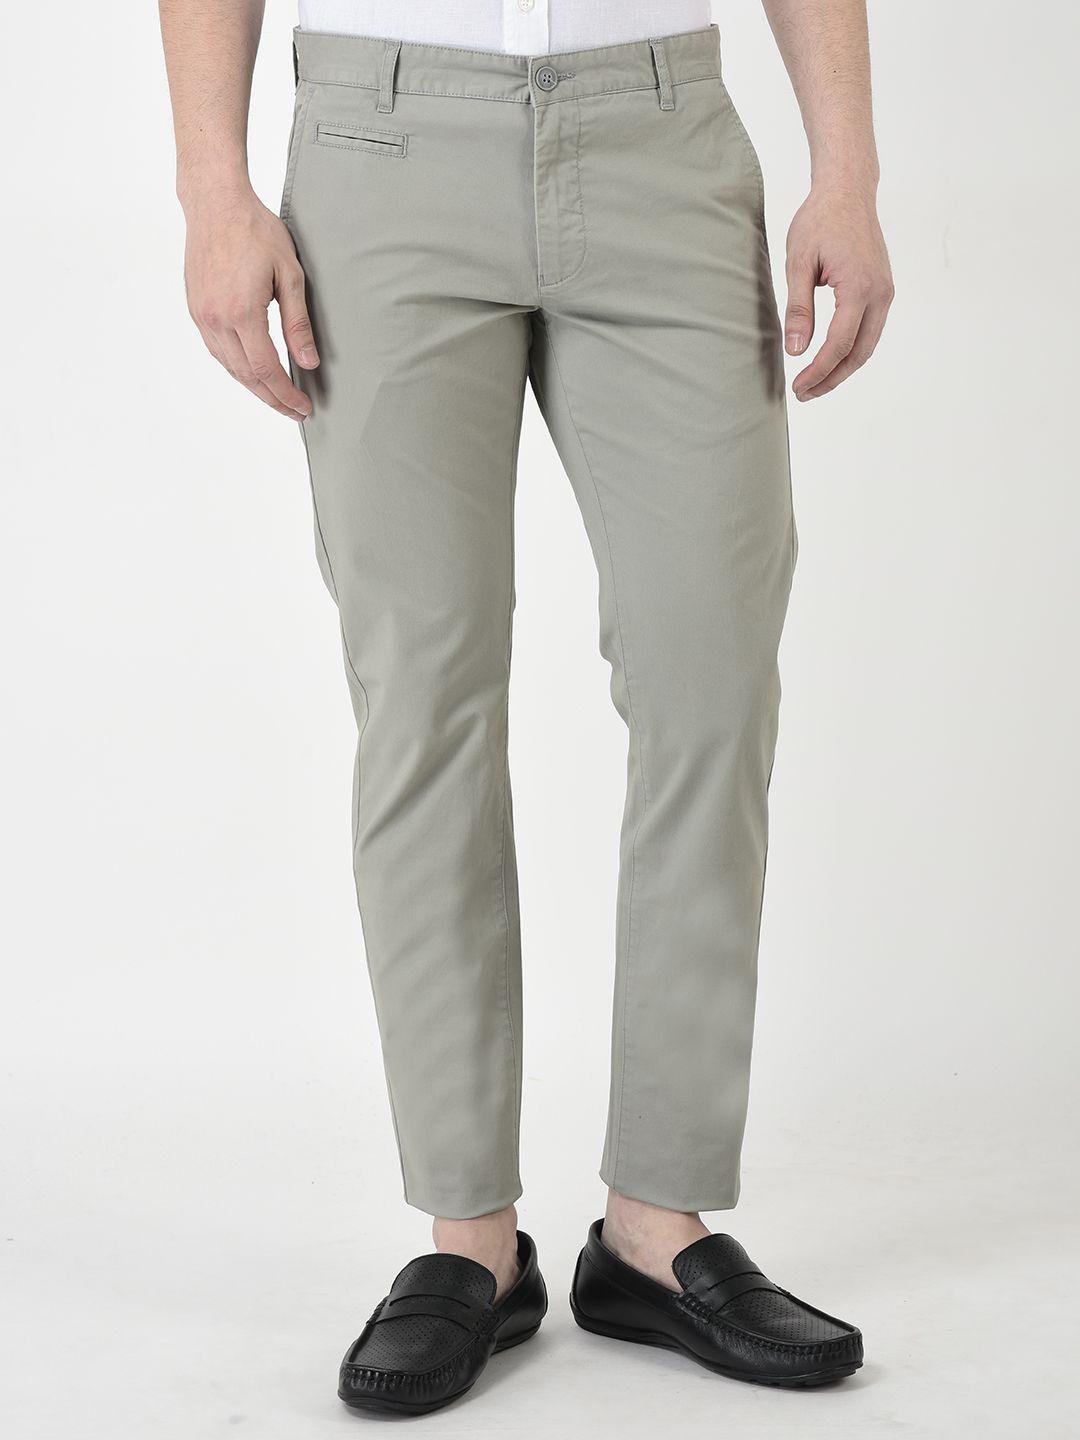 Buy Men Black Solid Regular Fit Casual Trousers Online - 811031